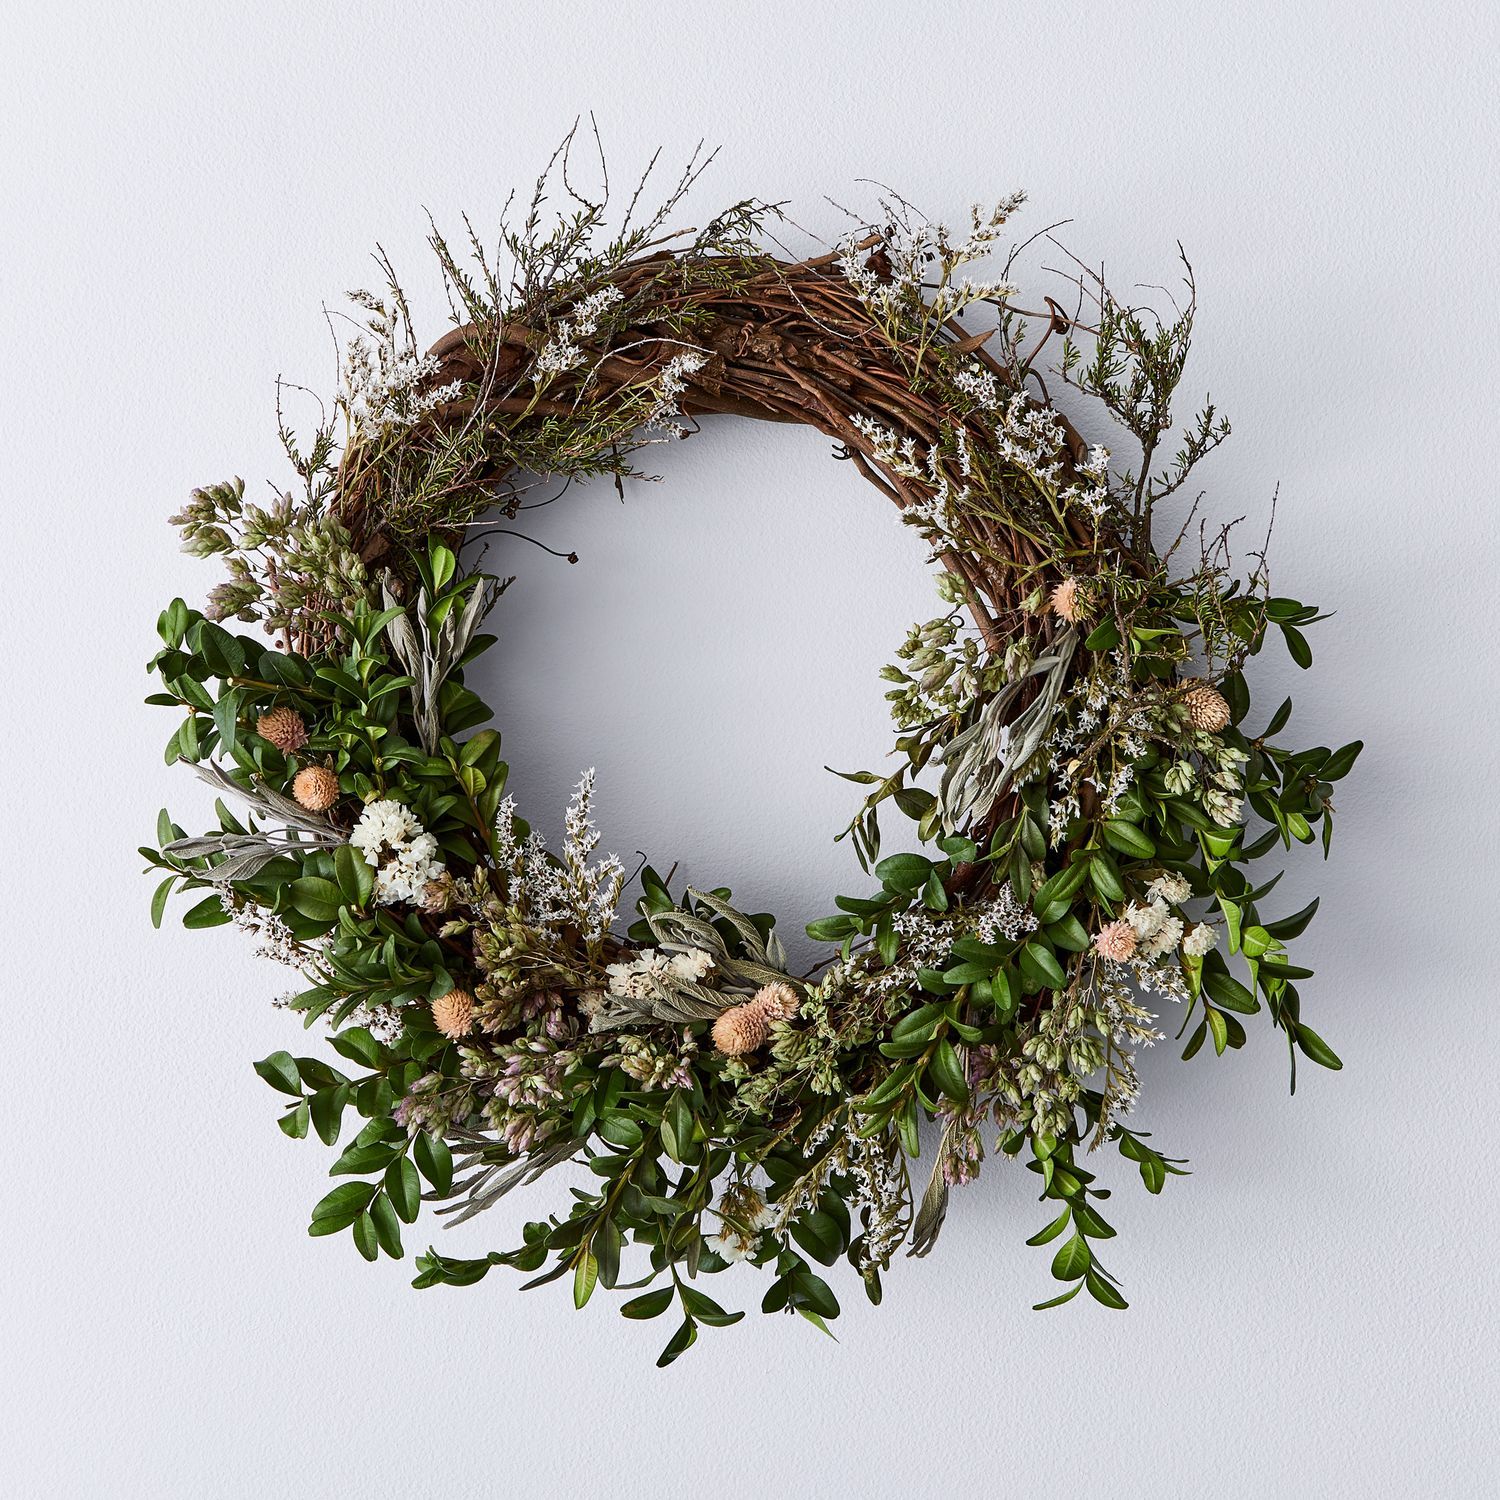 Decorative Wreaths 25 Best Summer Wreaths 2021 - Summer Wreath Ideas for Front Doors